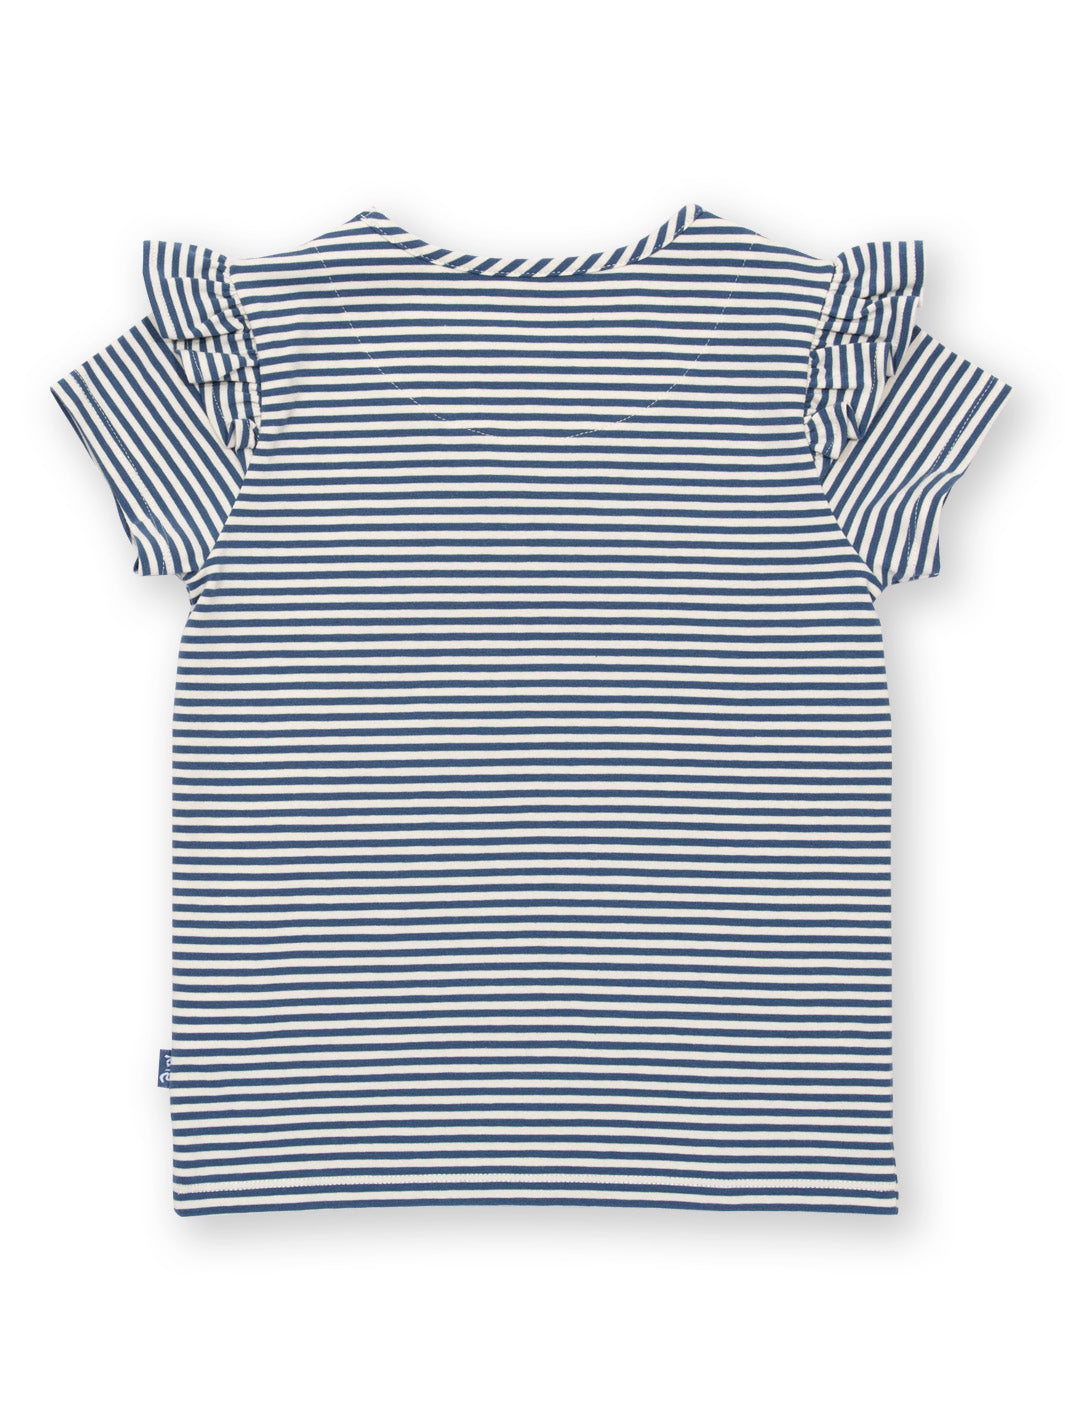 SALE Kite Flutterby T-Shirt Navy Stripe SALE